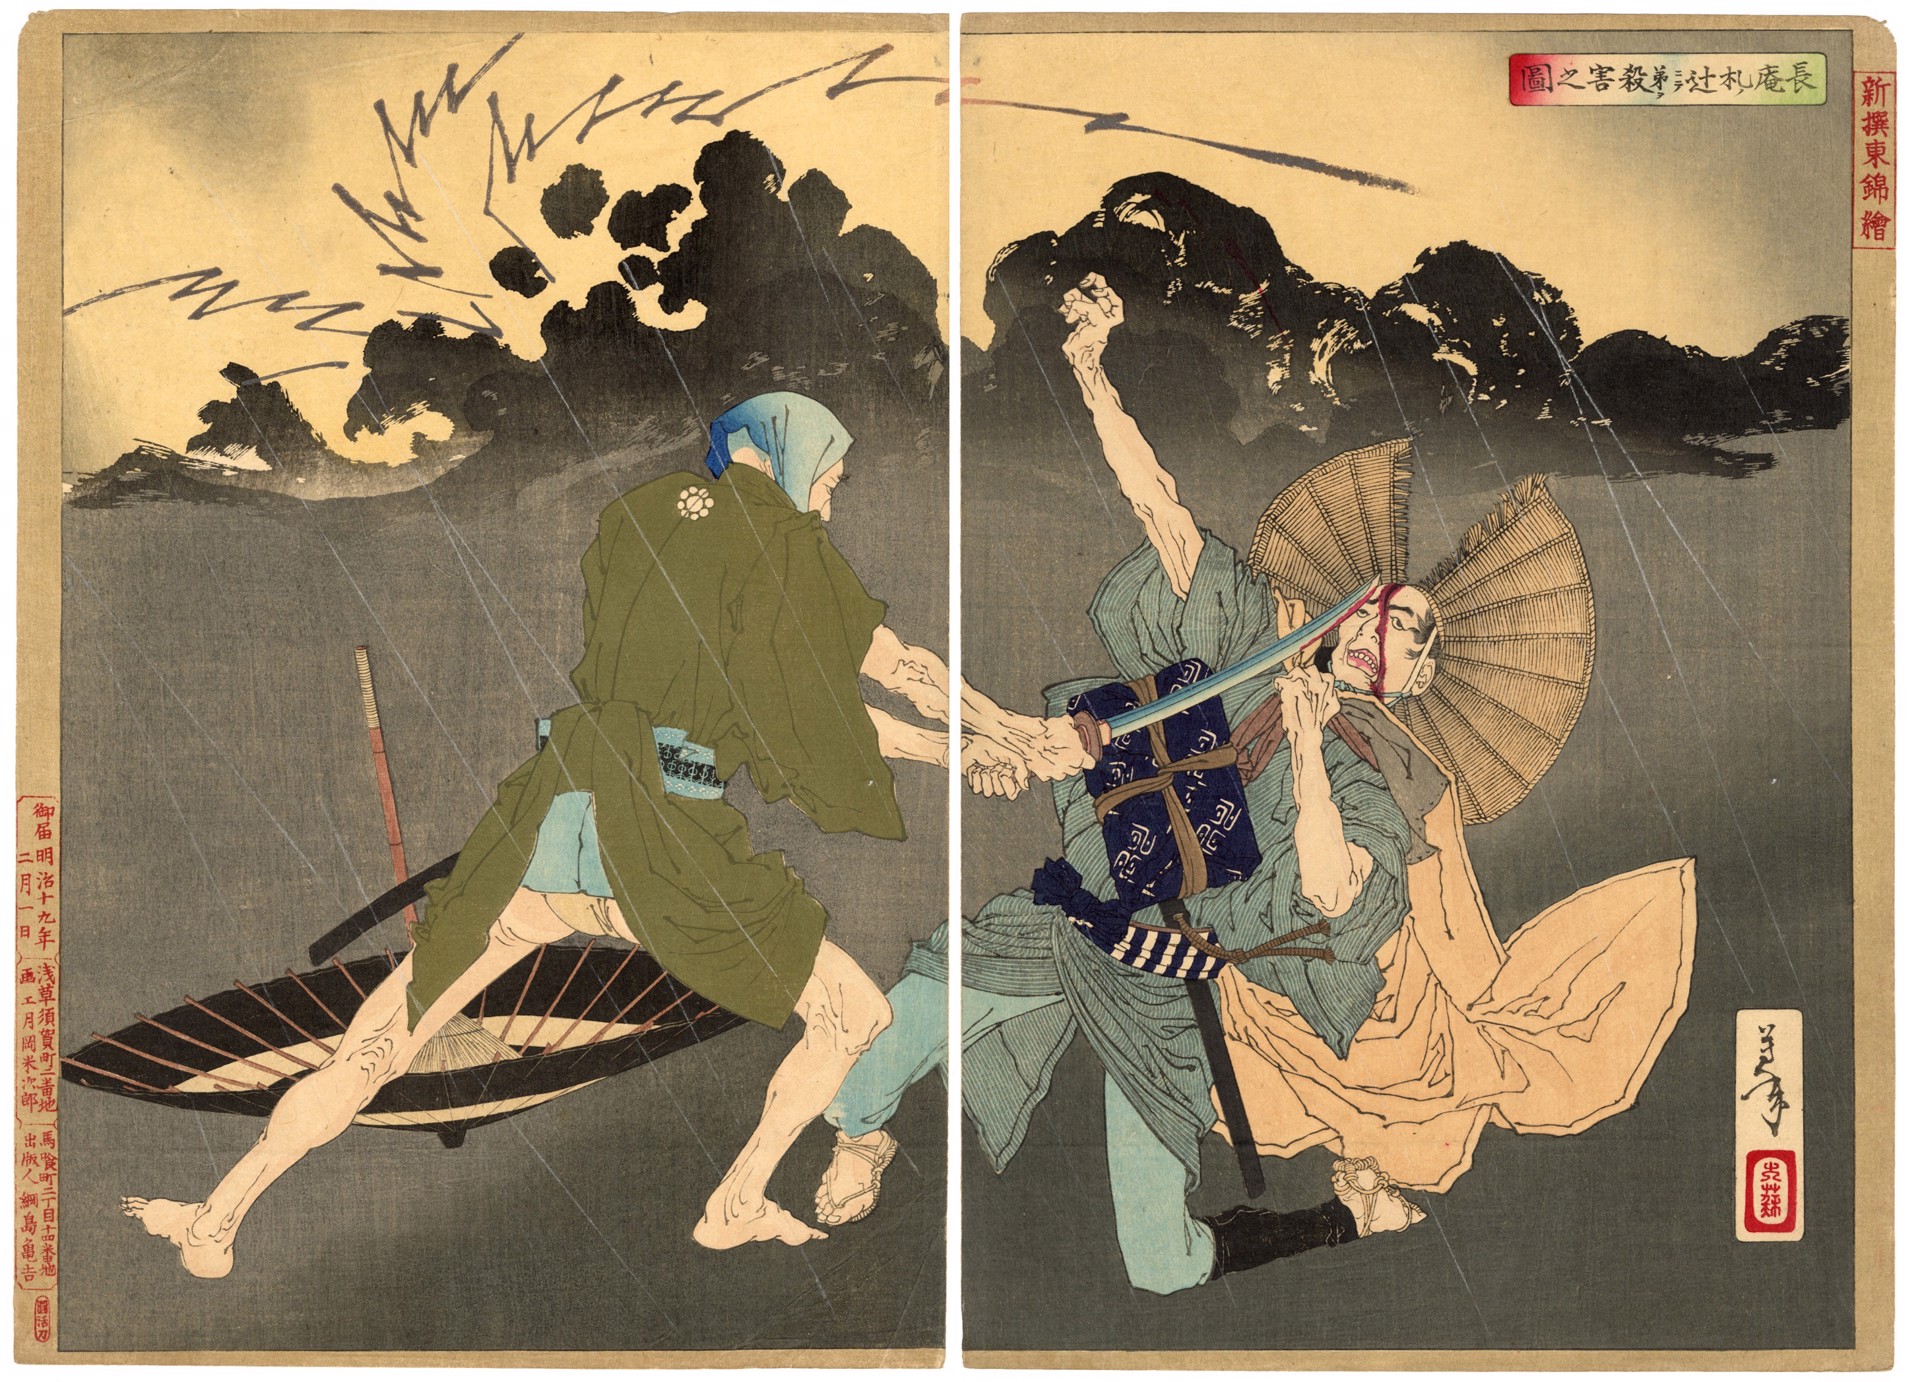 Murai Choan Murders His Brother at the Crossroads of Fudanotsuji by Yoshitoshi